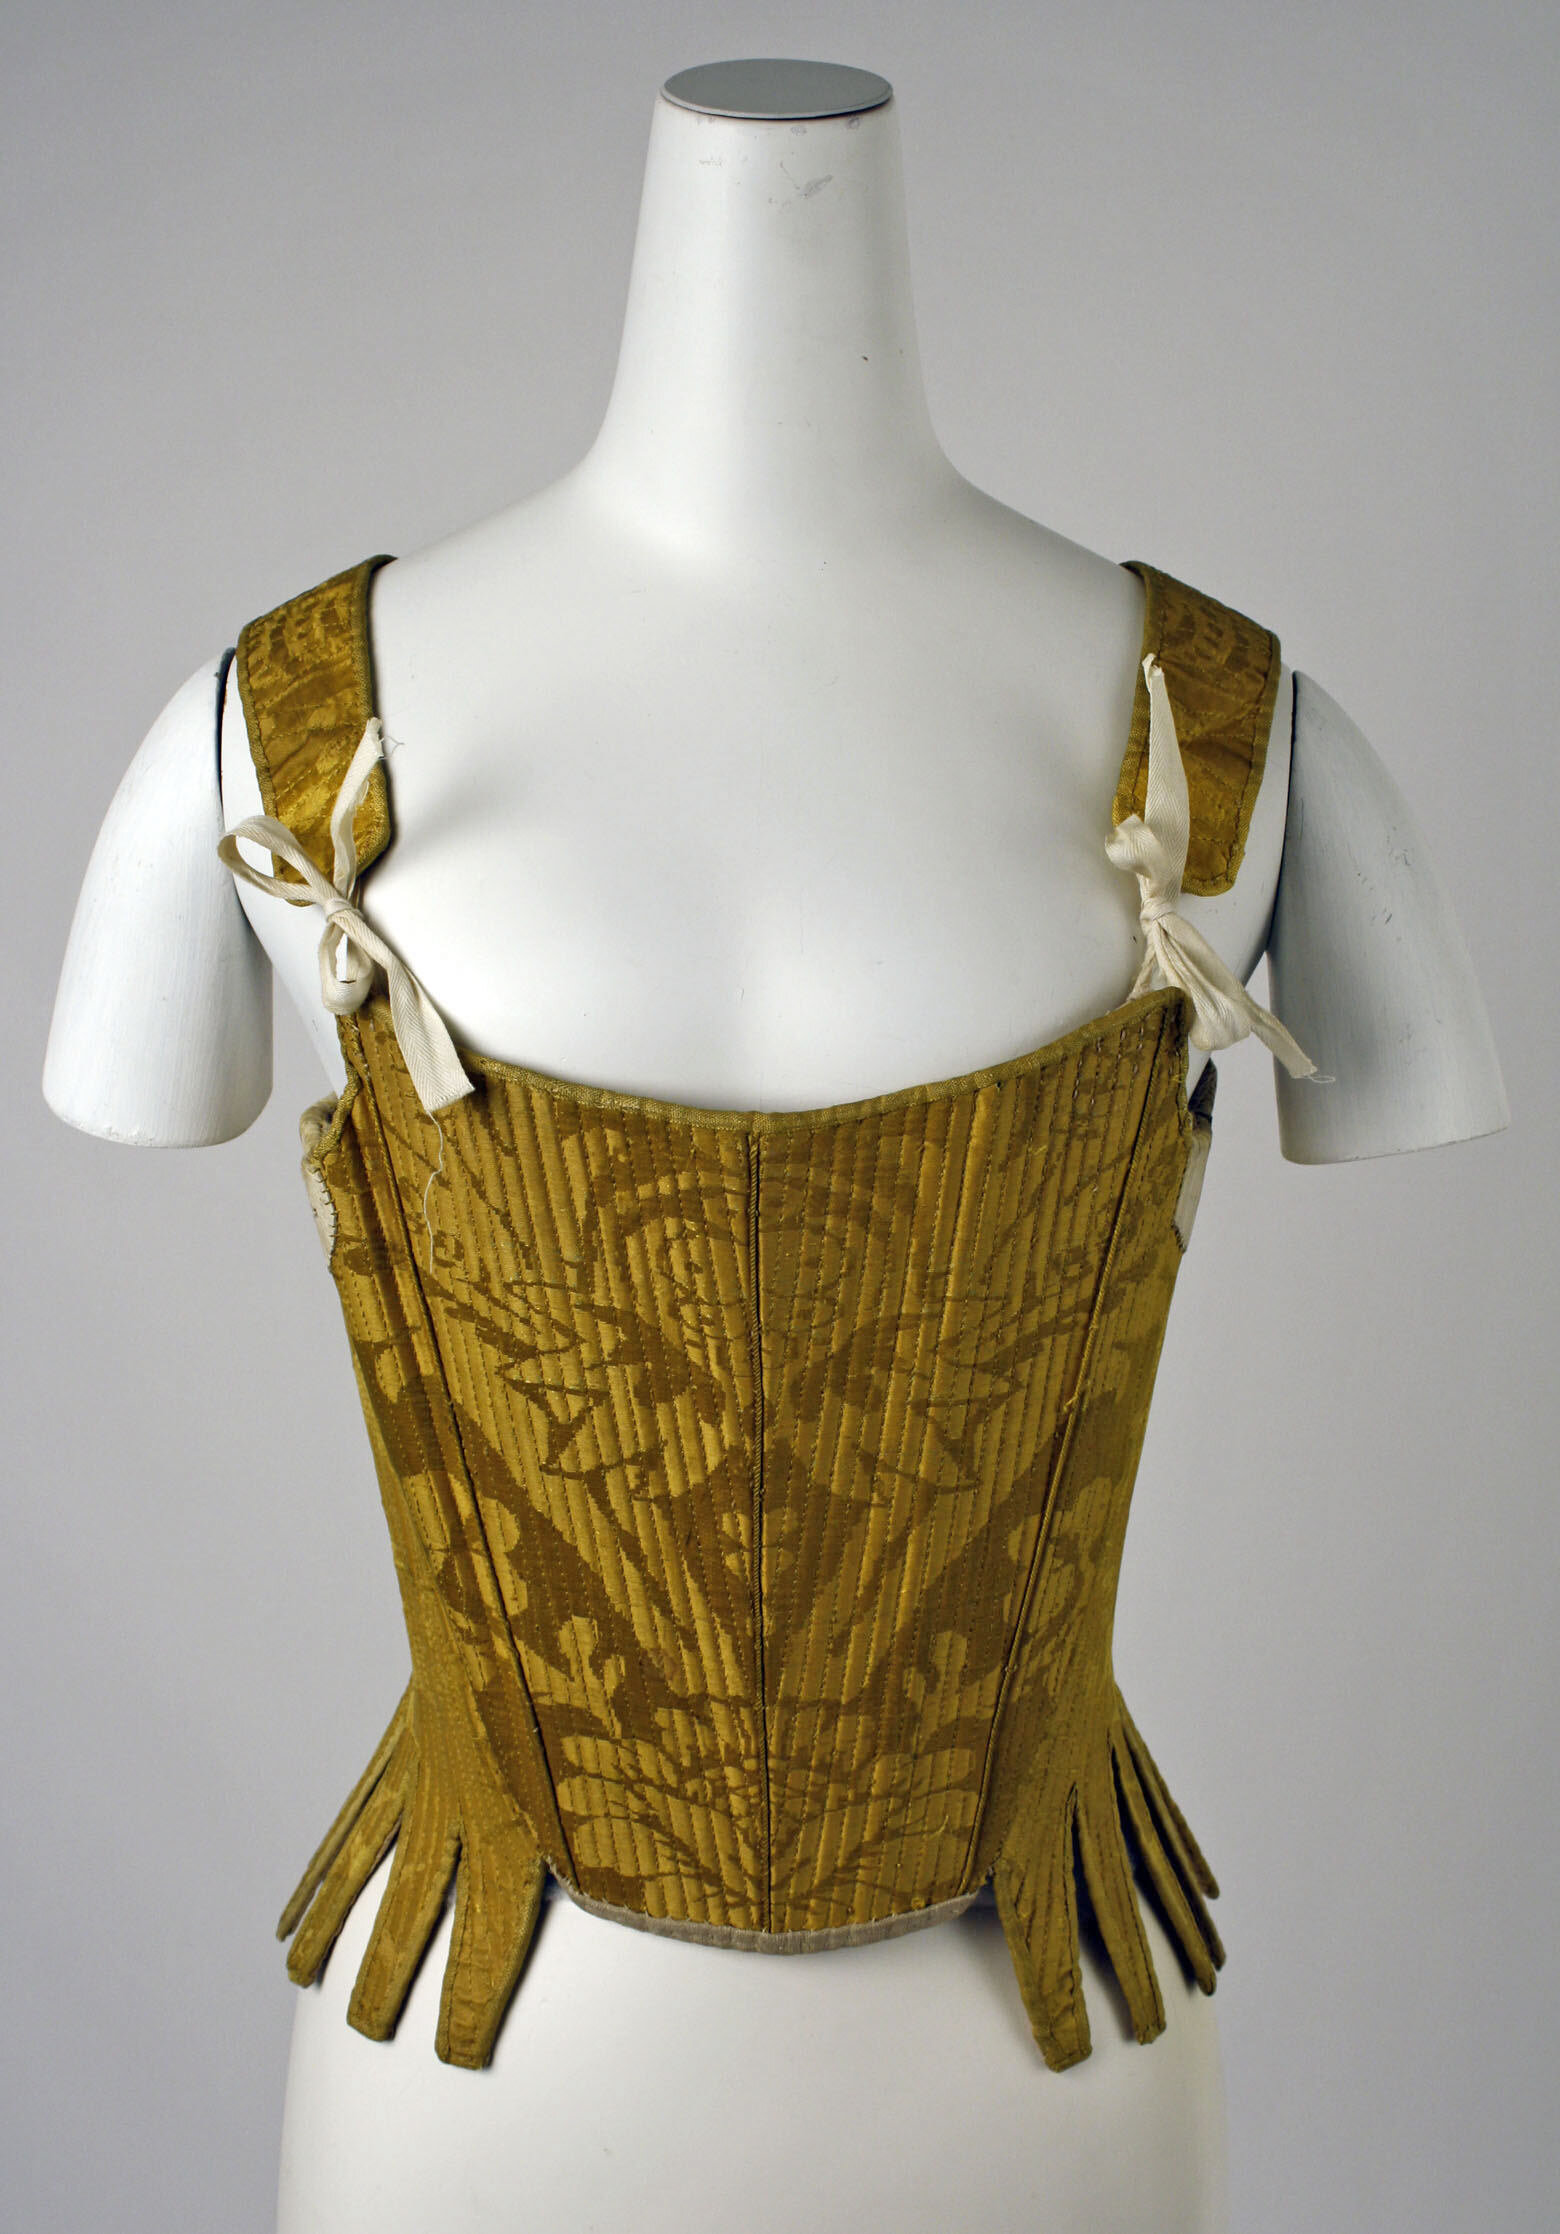 an 18th century Spanish corset. 